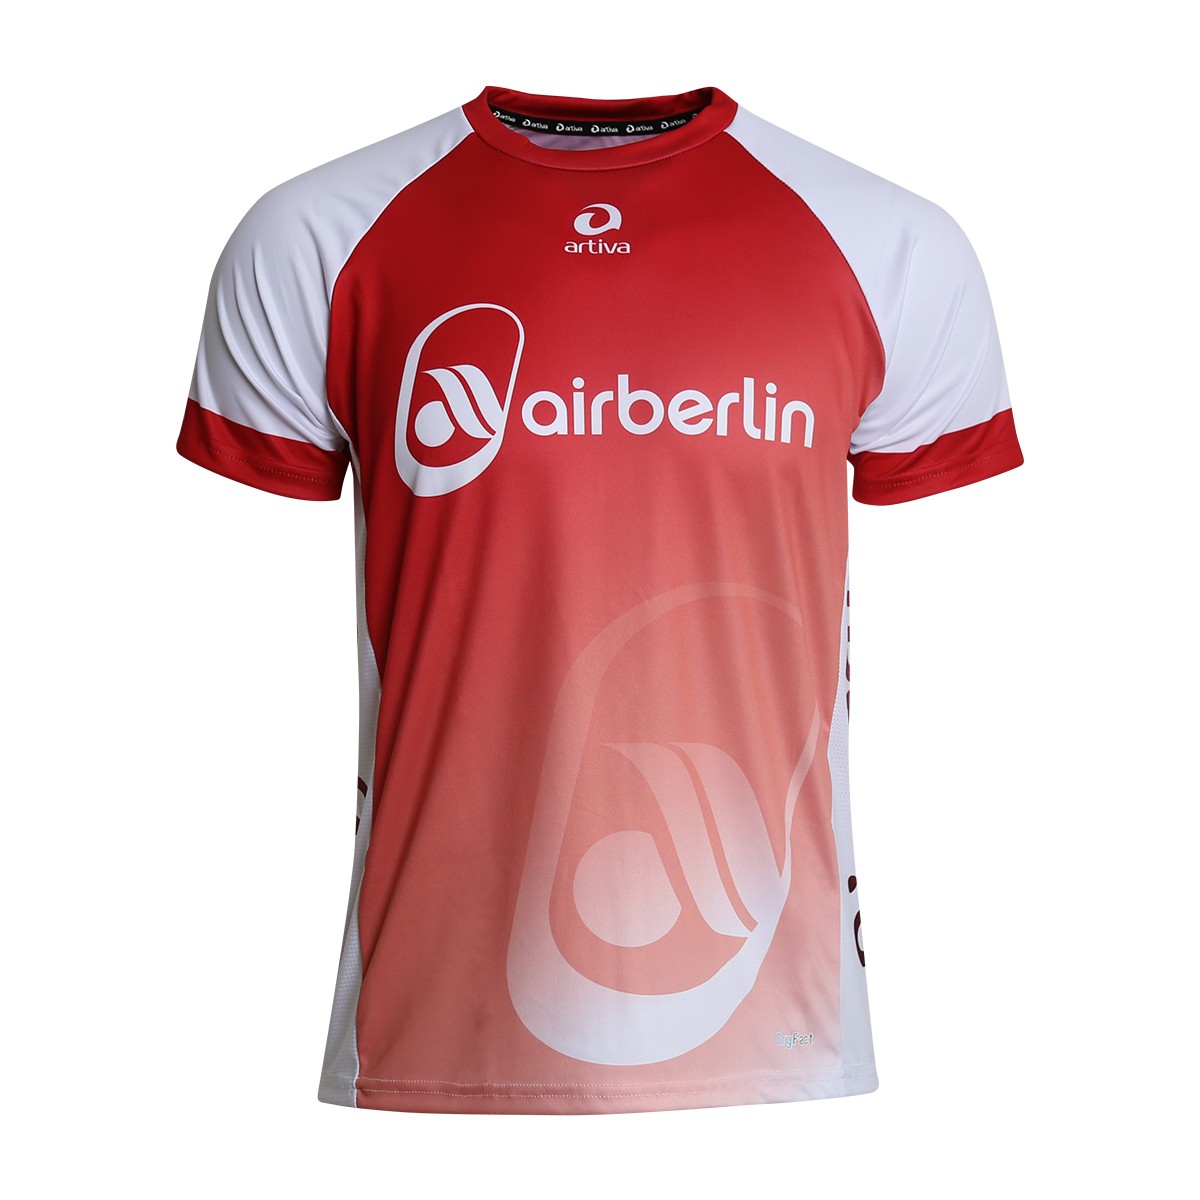 airberlin / Air Berlin